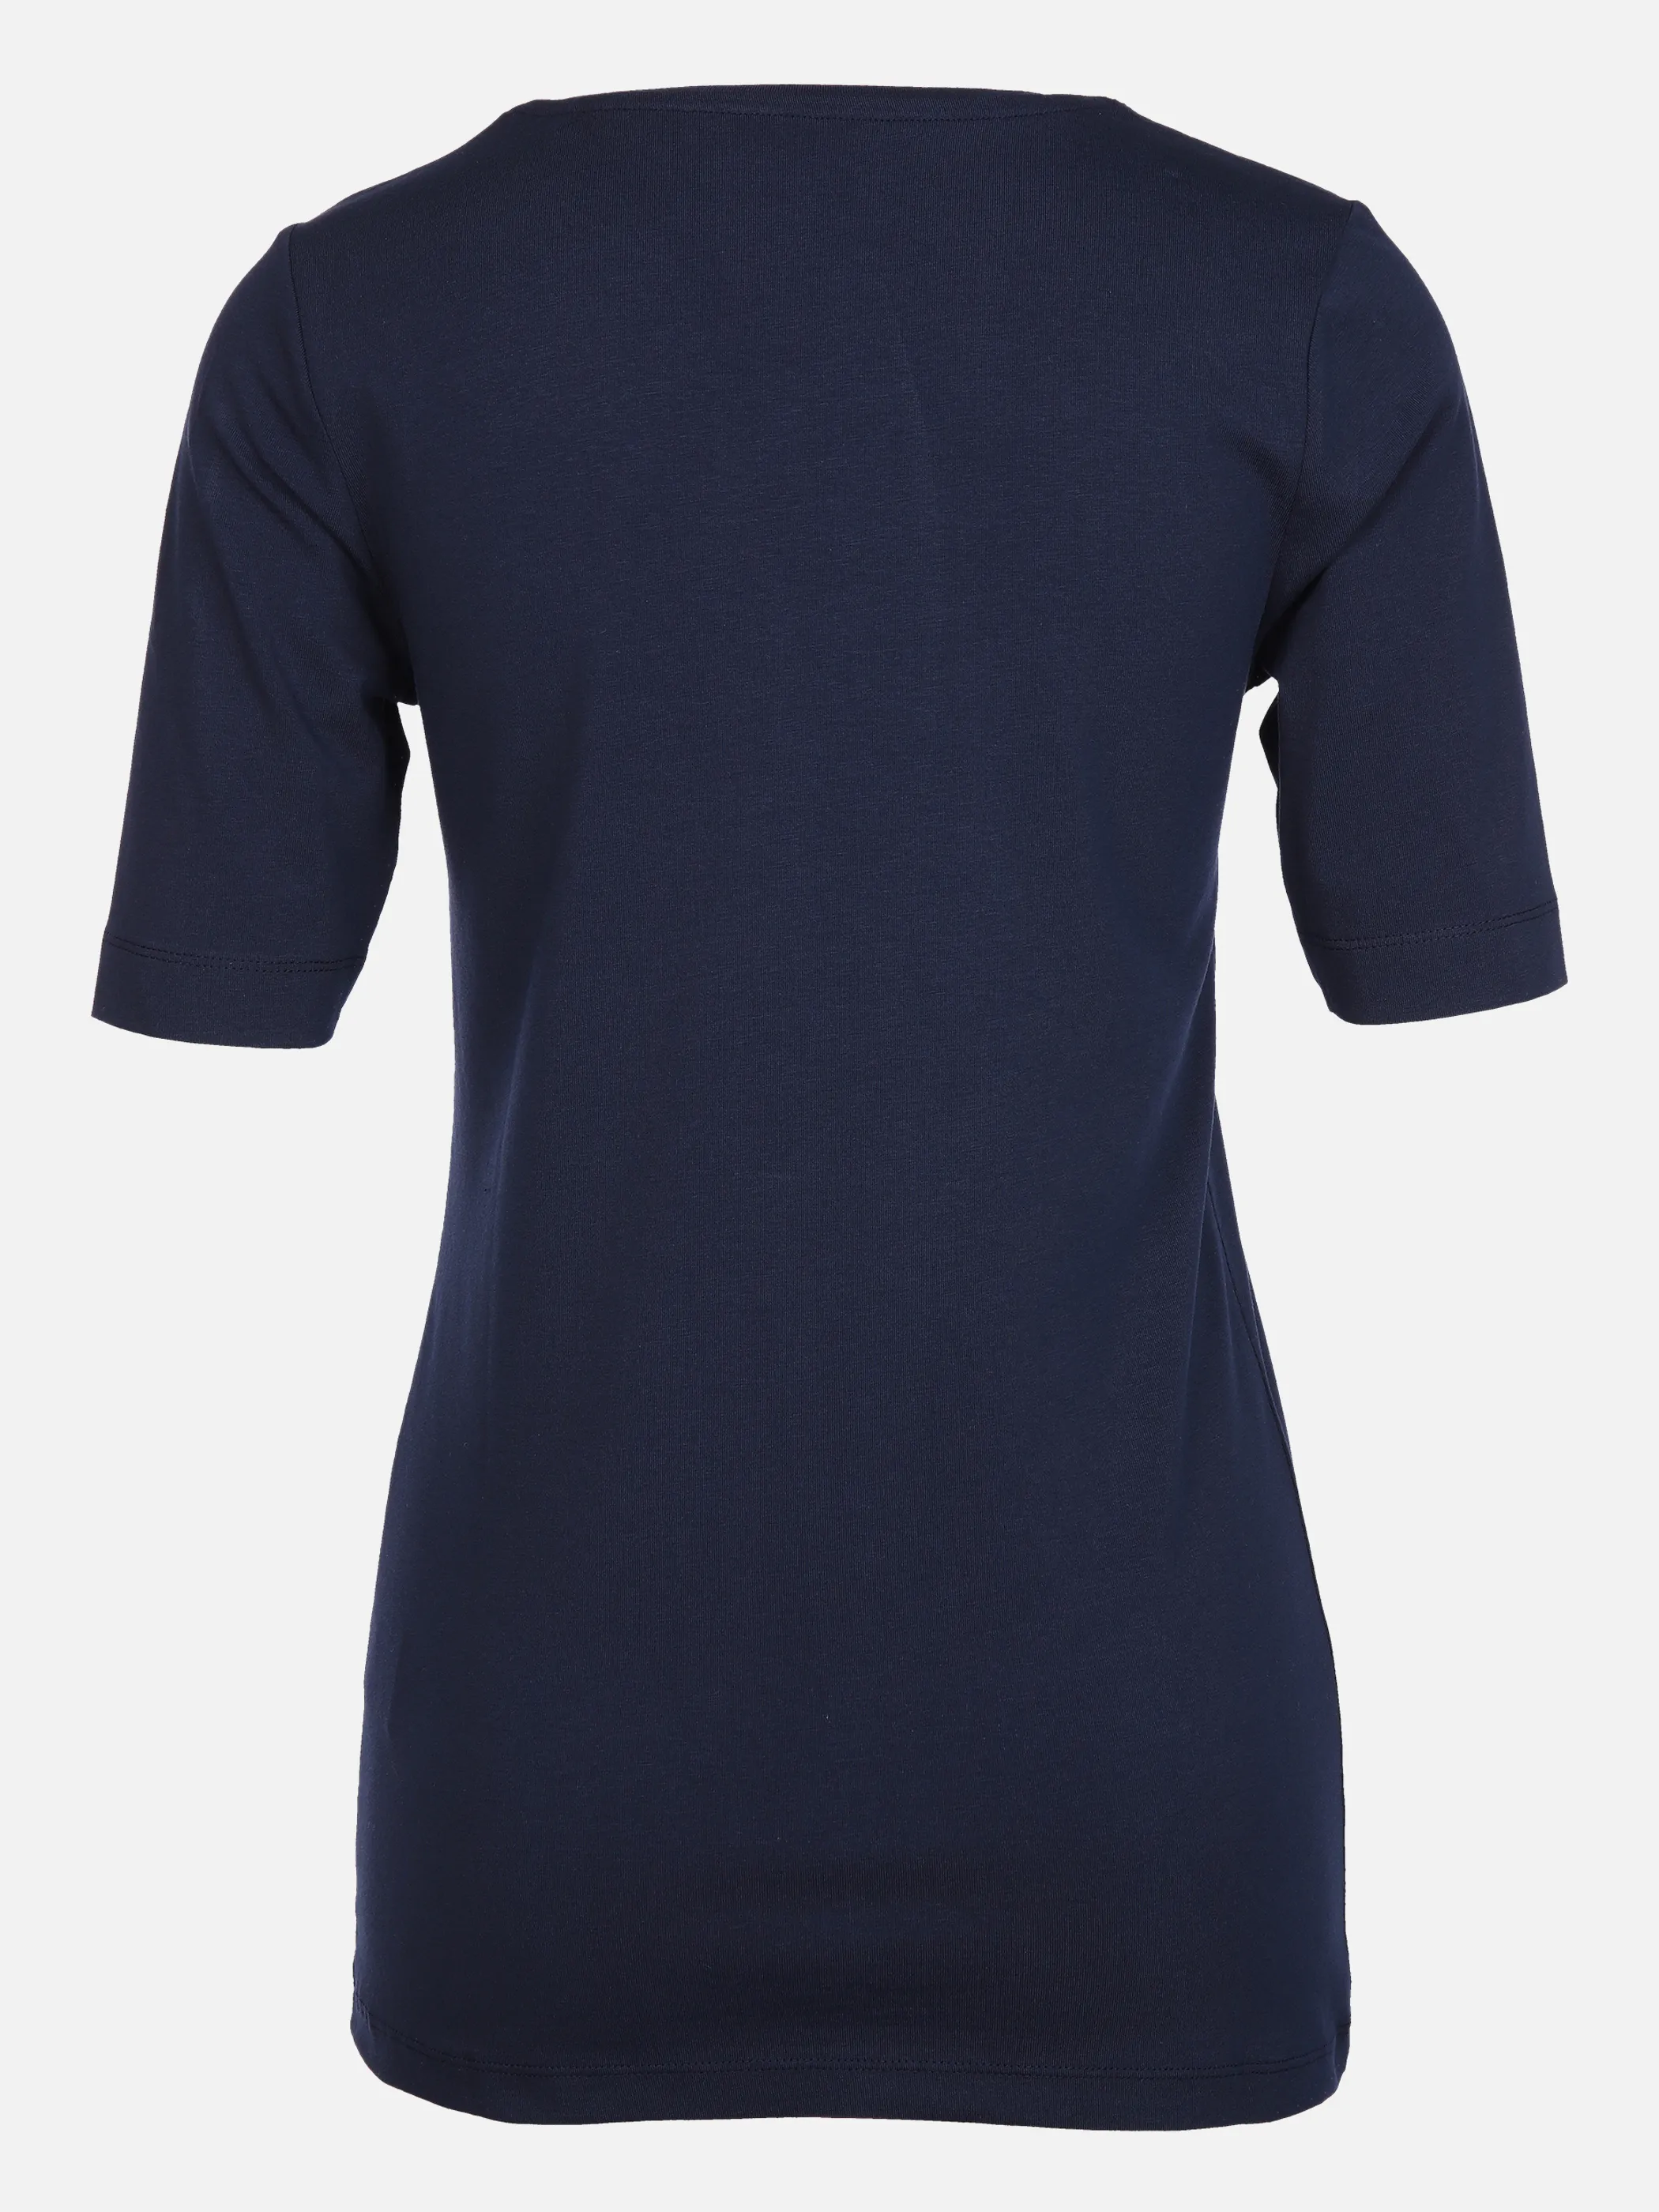 Lisa Tossa Da-Basic-T-Shirt m. Rundhals Blau 851521 MARINE 2